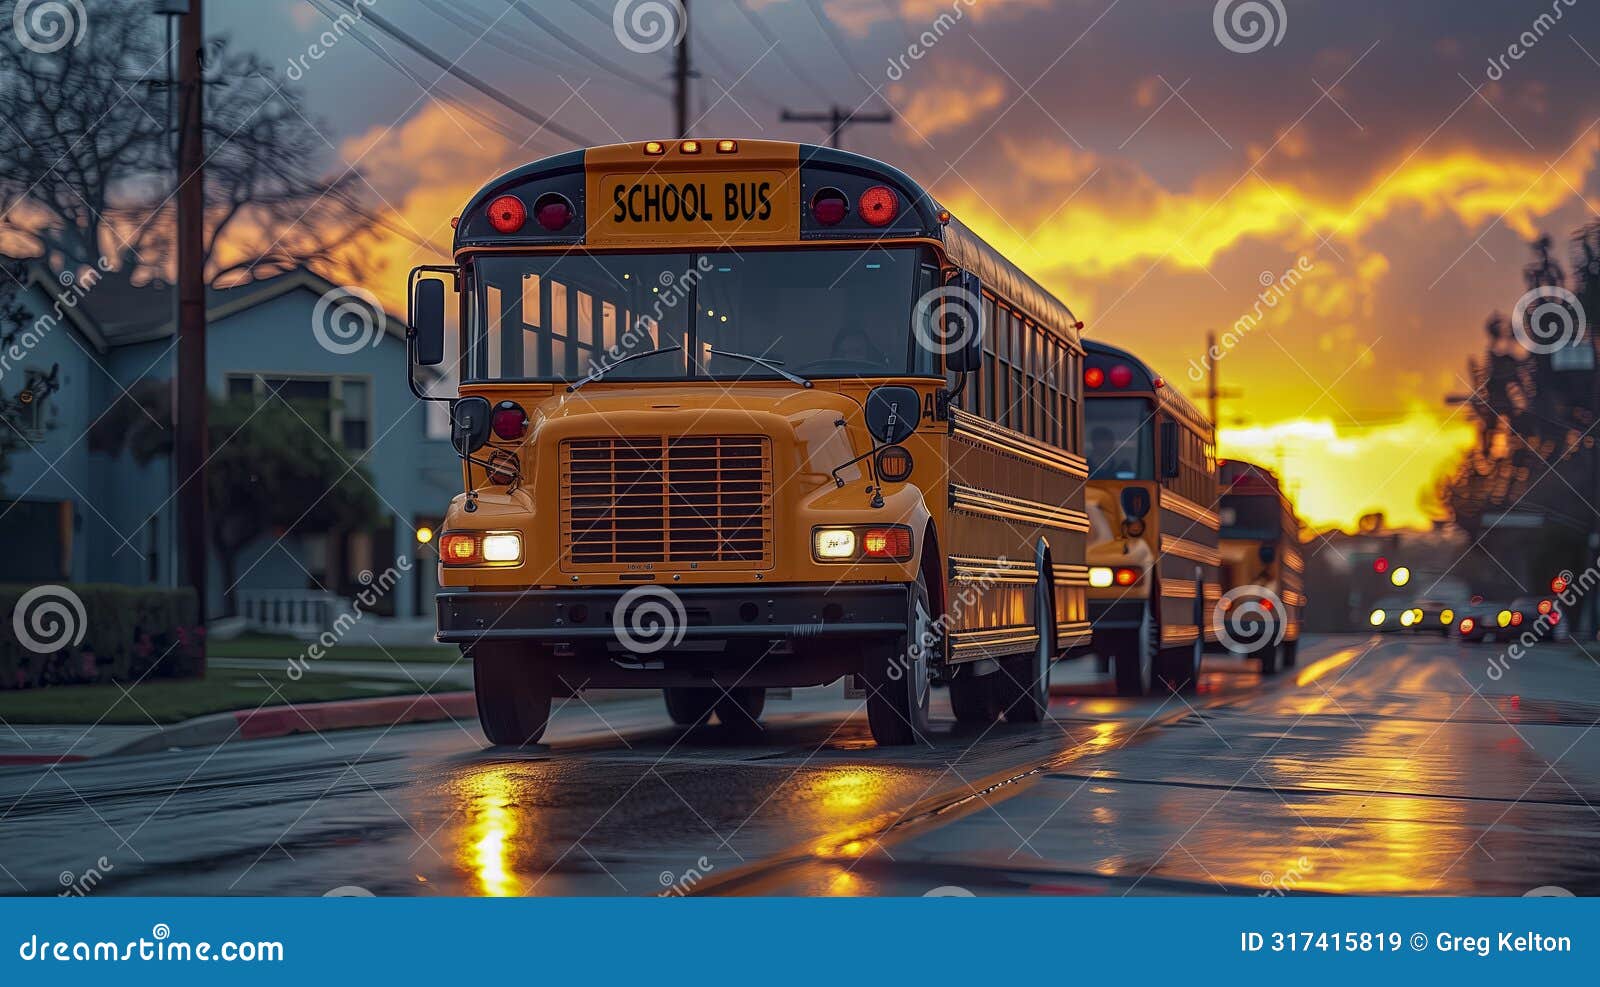 school bus pausing on a rainy sunset boulevard